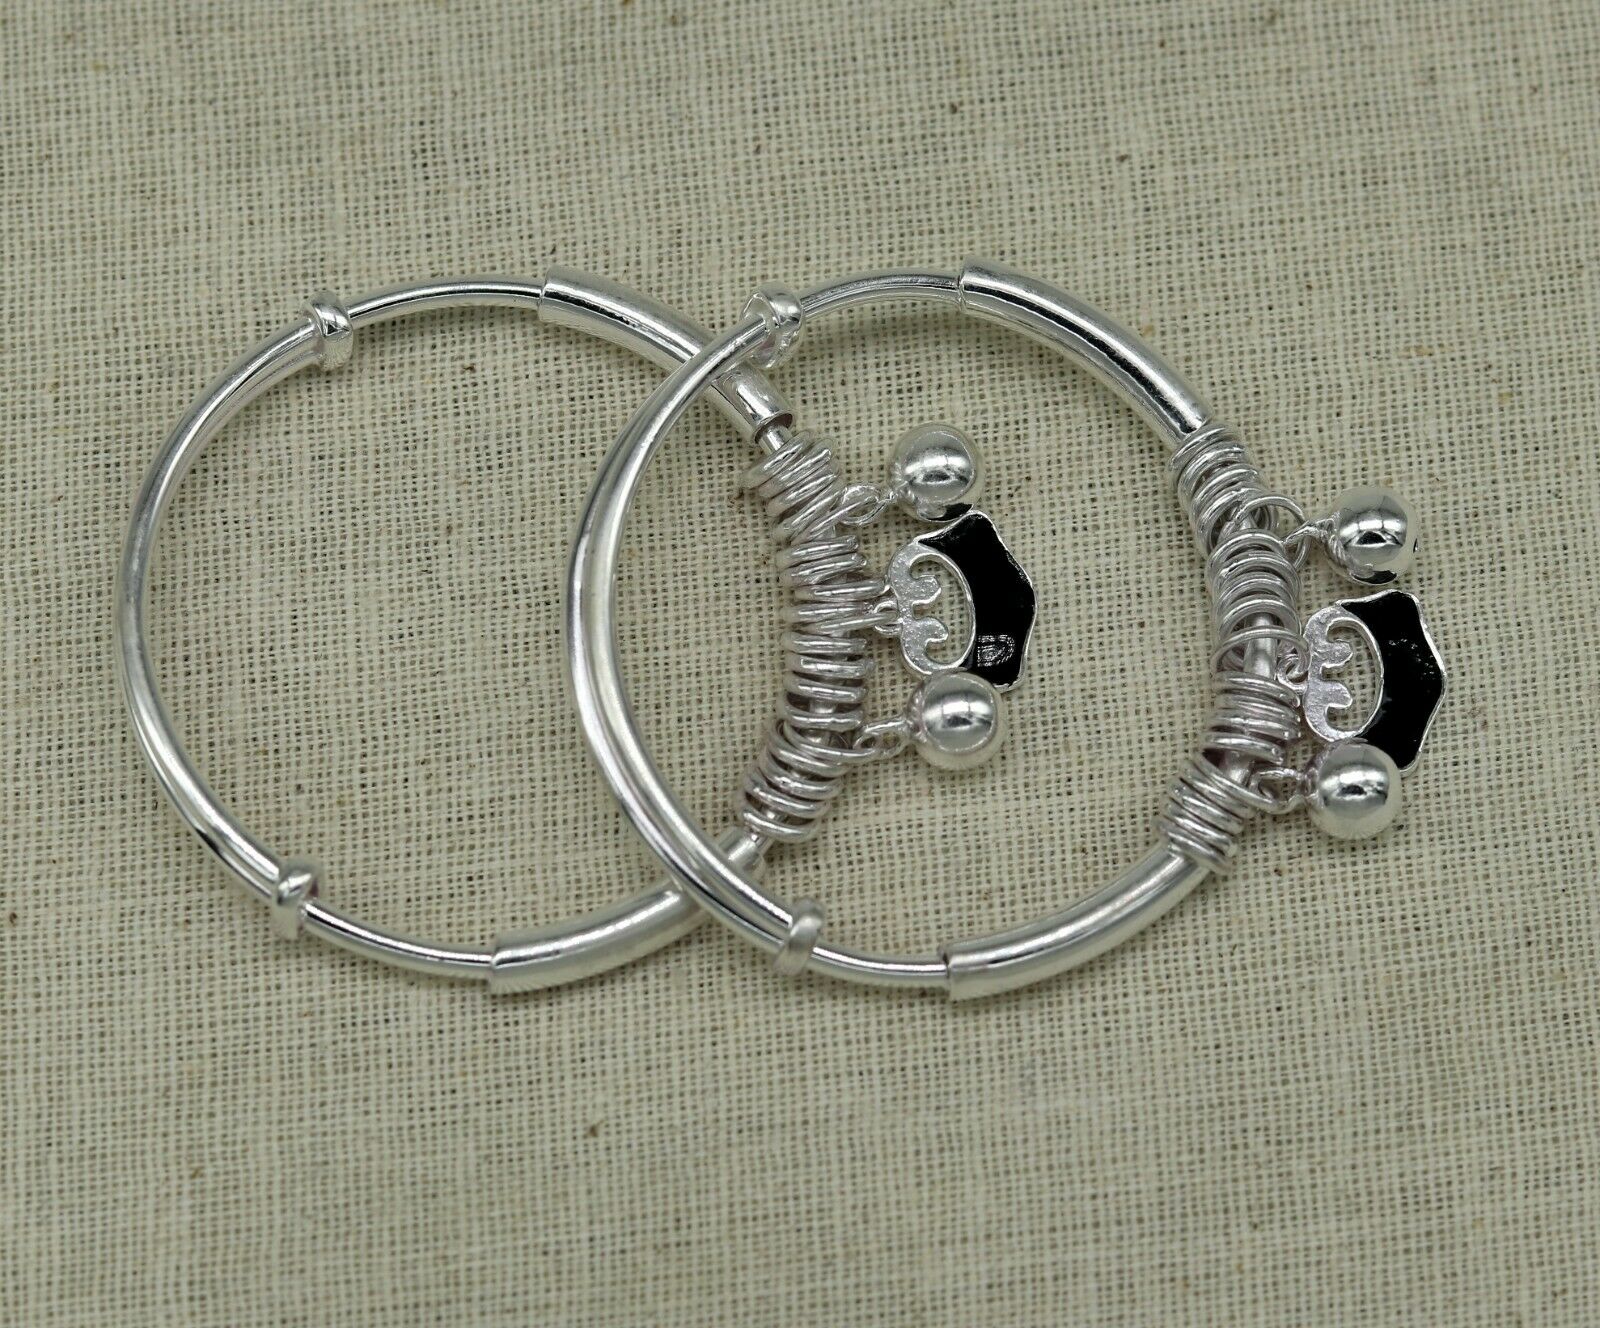 925 sterling silver adjustable charm bangle bracelet kada unisex kids baby bbk32 - TRIBAL ORNAMENTS